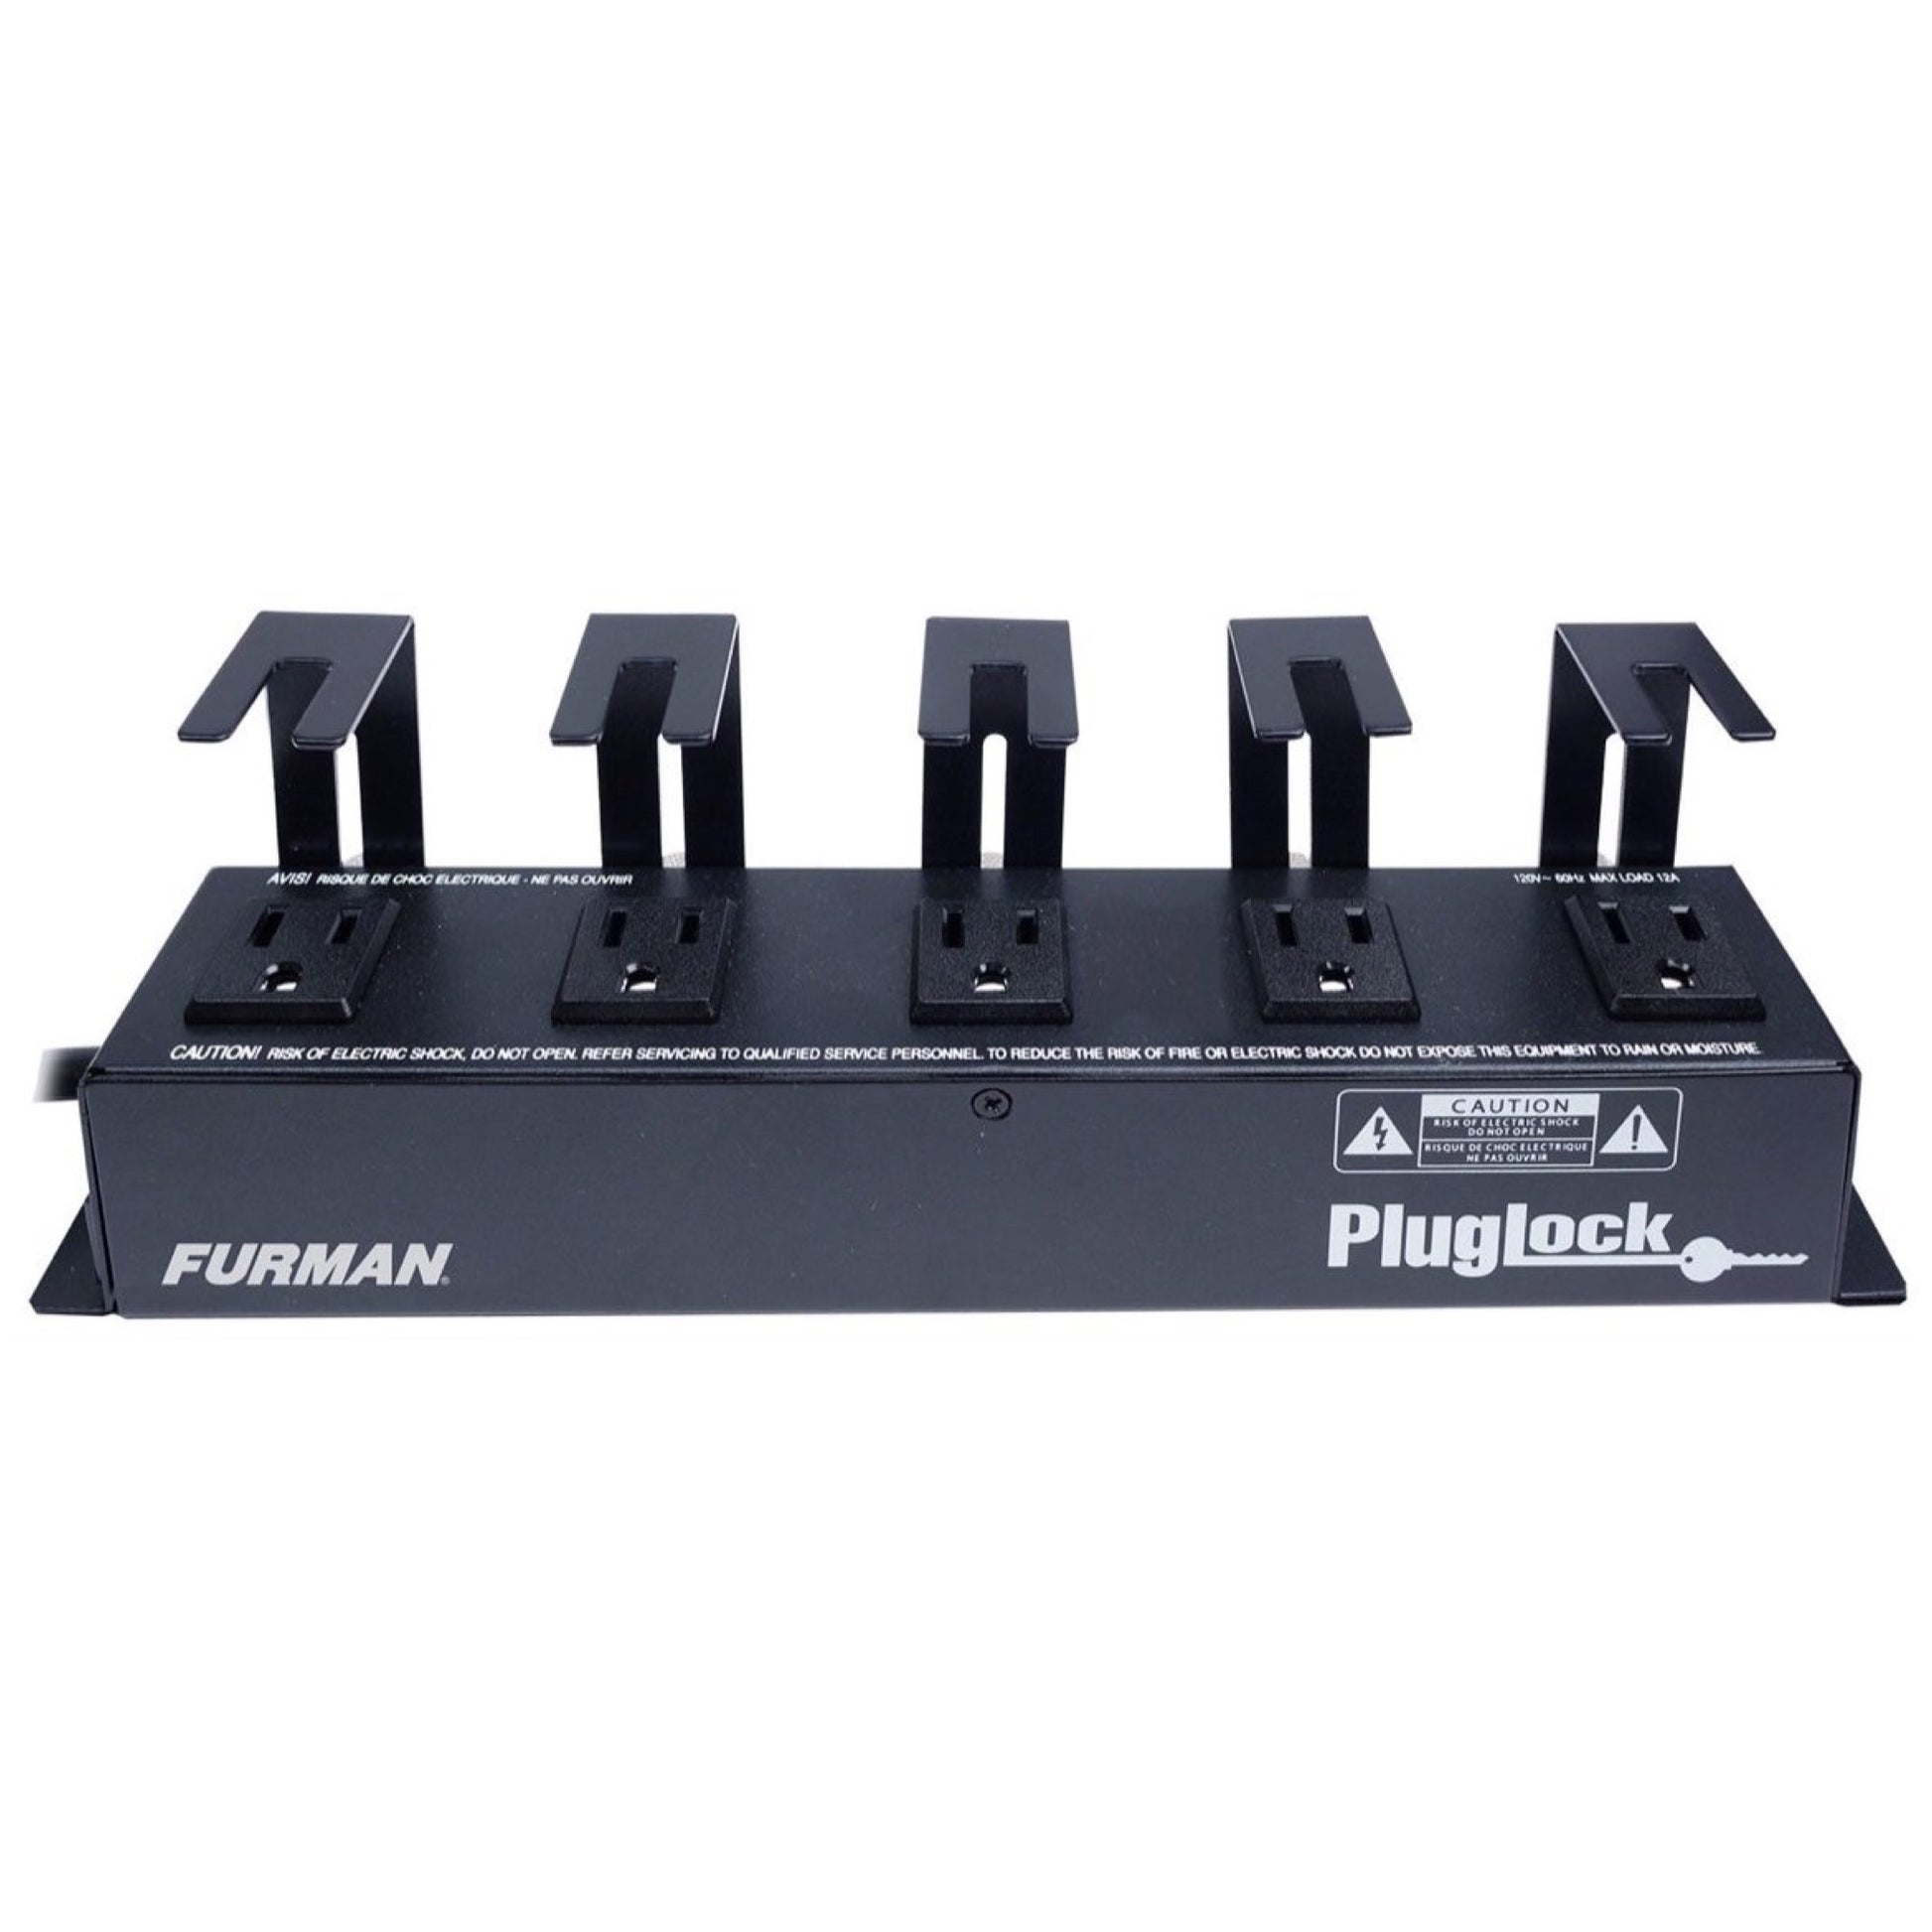 Furman Pluglock Outlet Strip